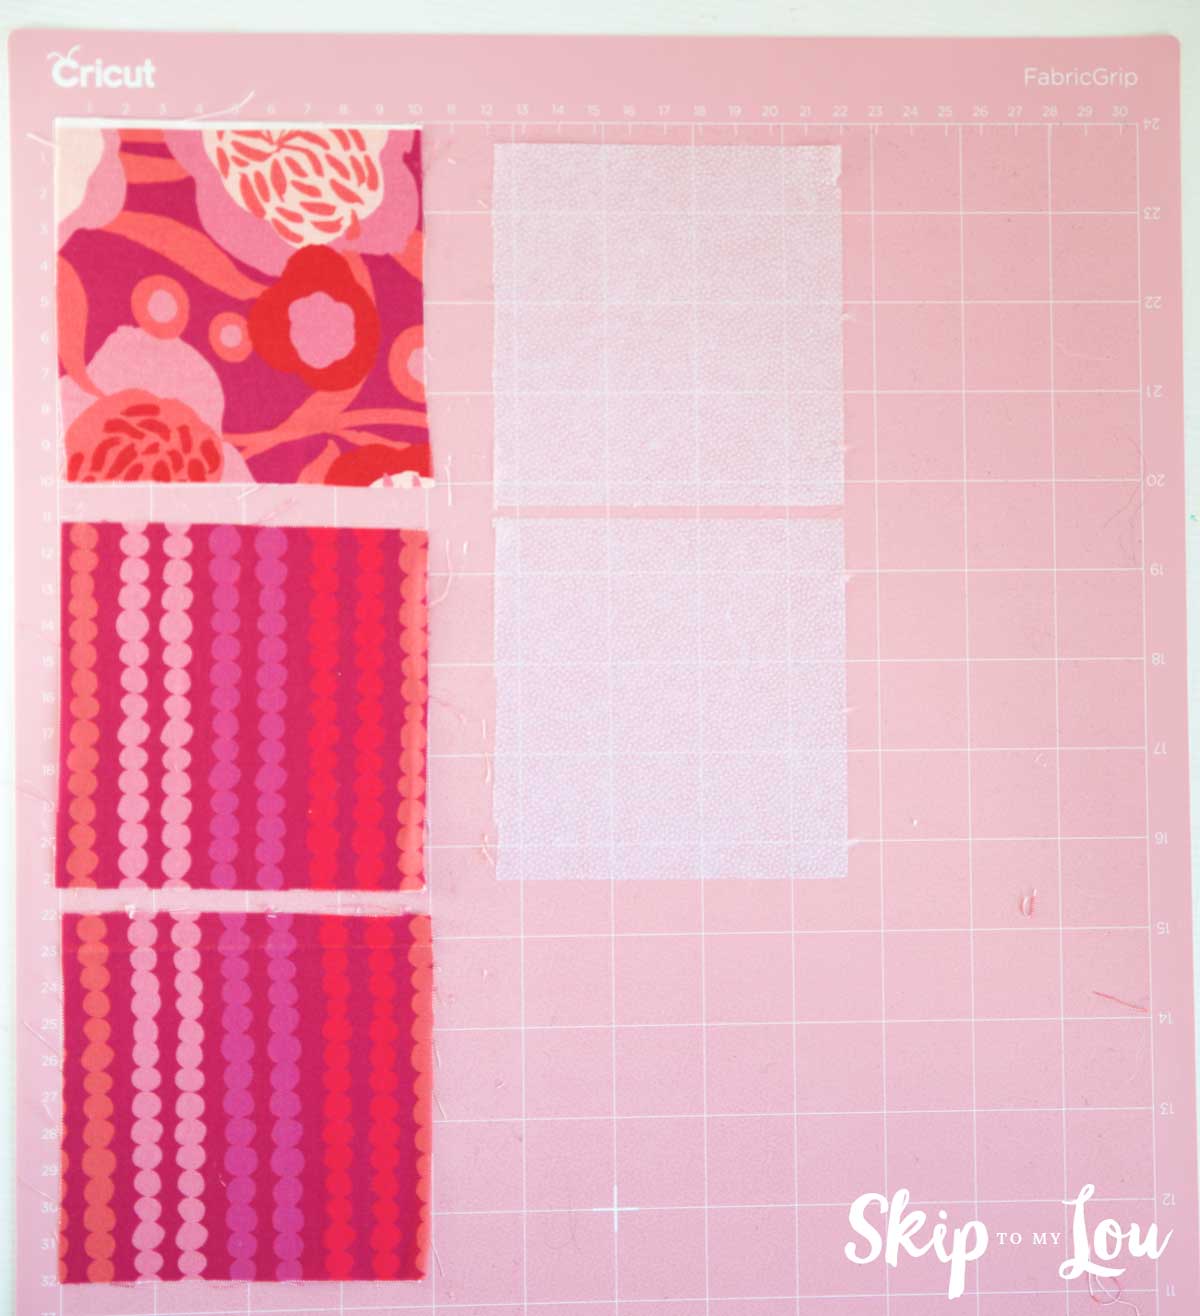 5 squares fabric on cricut fabric grip mat